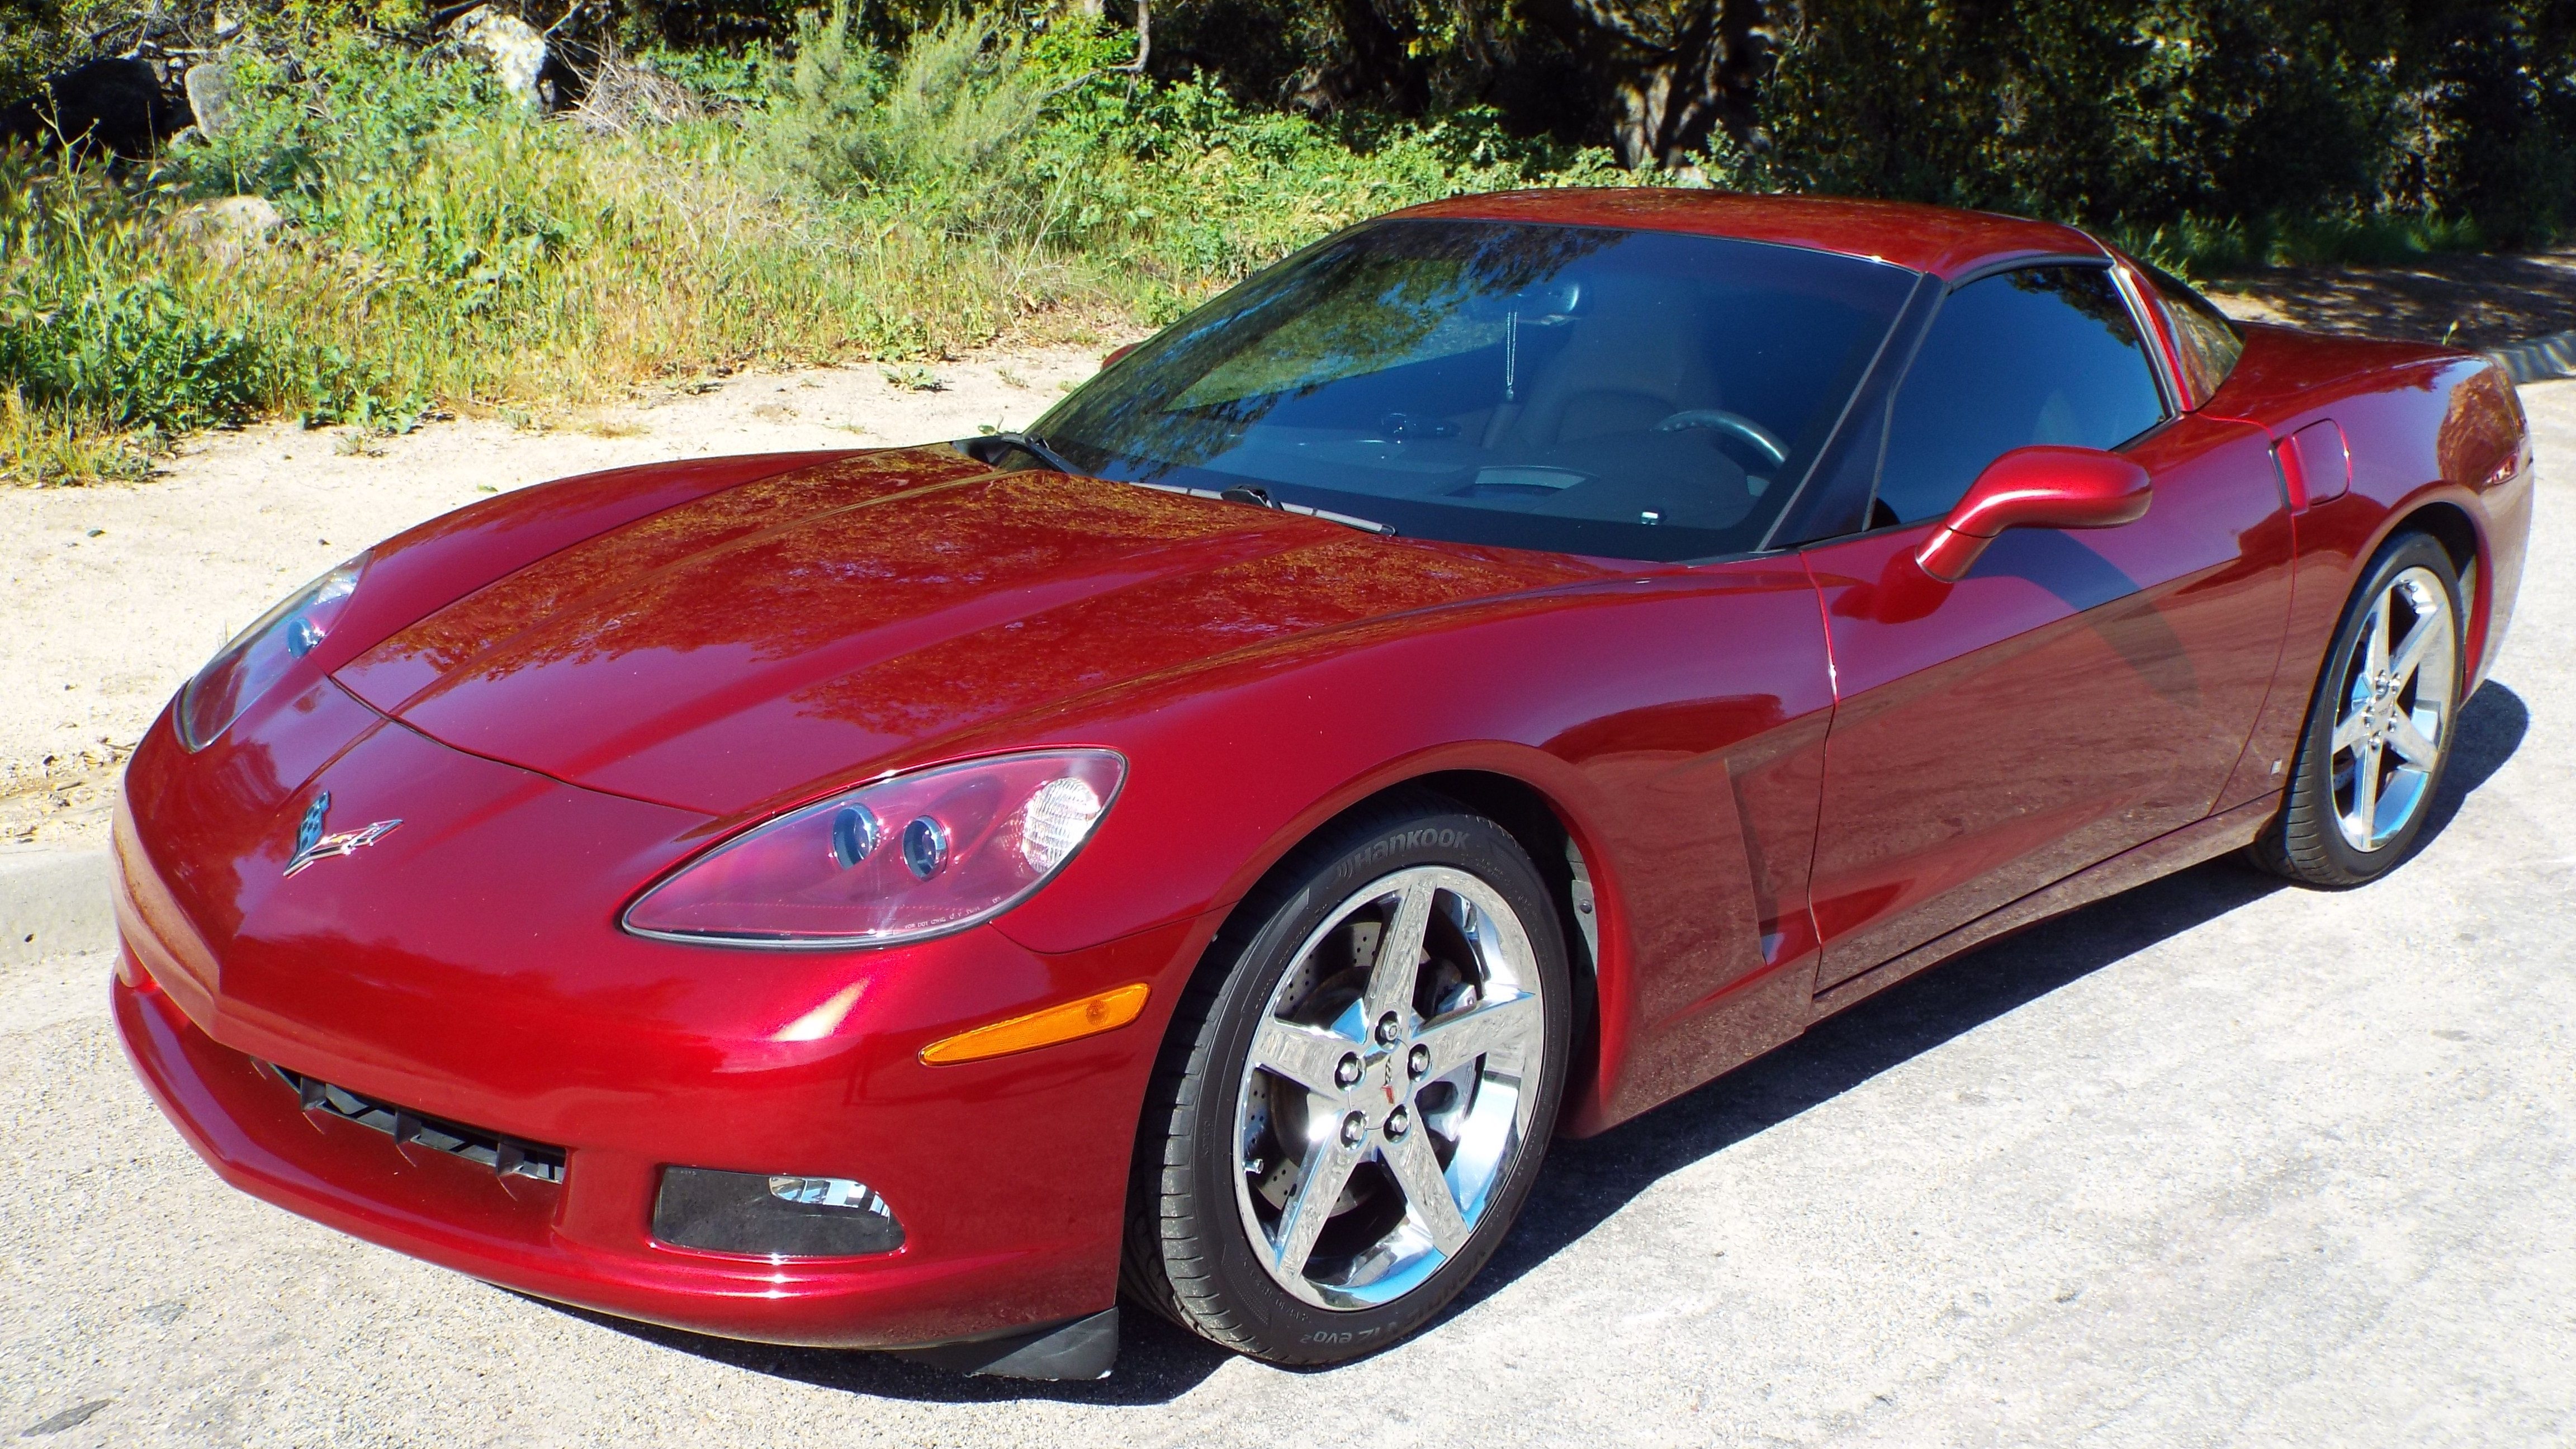 2007 C6 Corvette Pictures & Images.